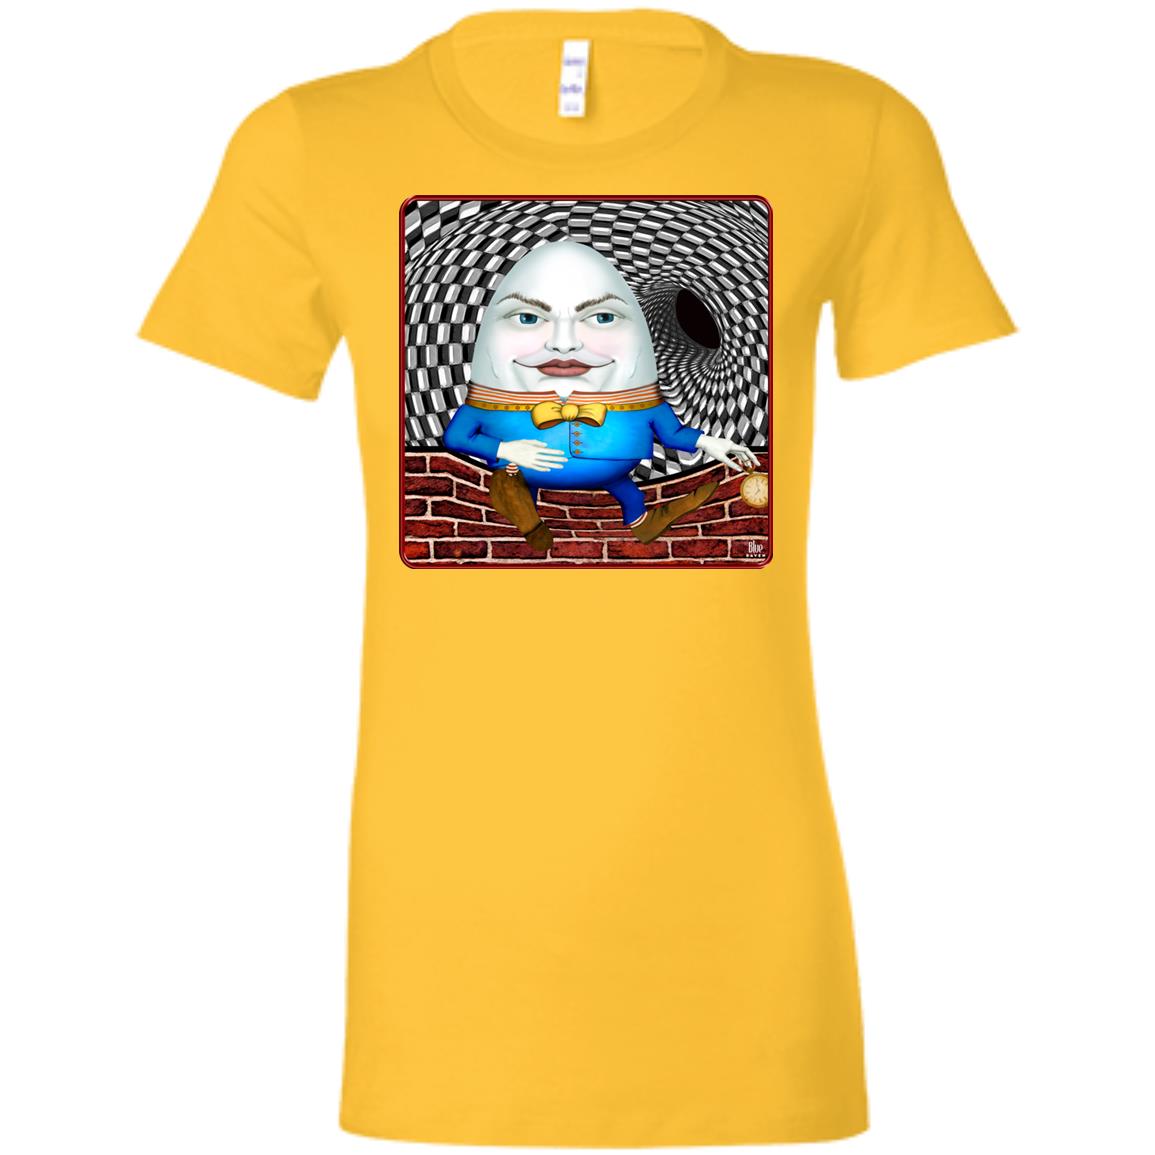 humpty dumpty - Women's Fitted T-Shirt